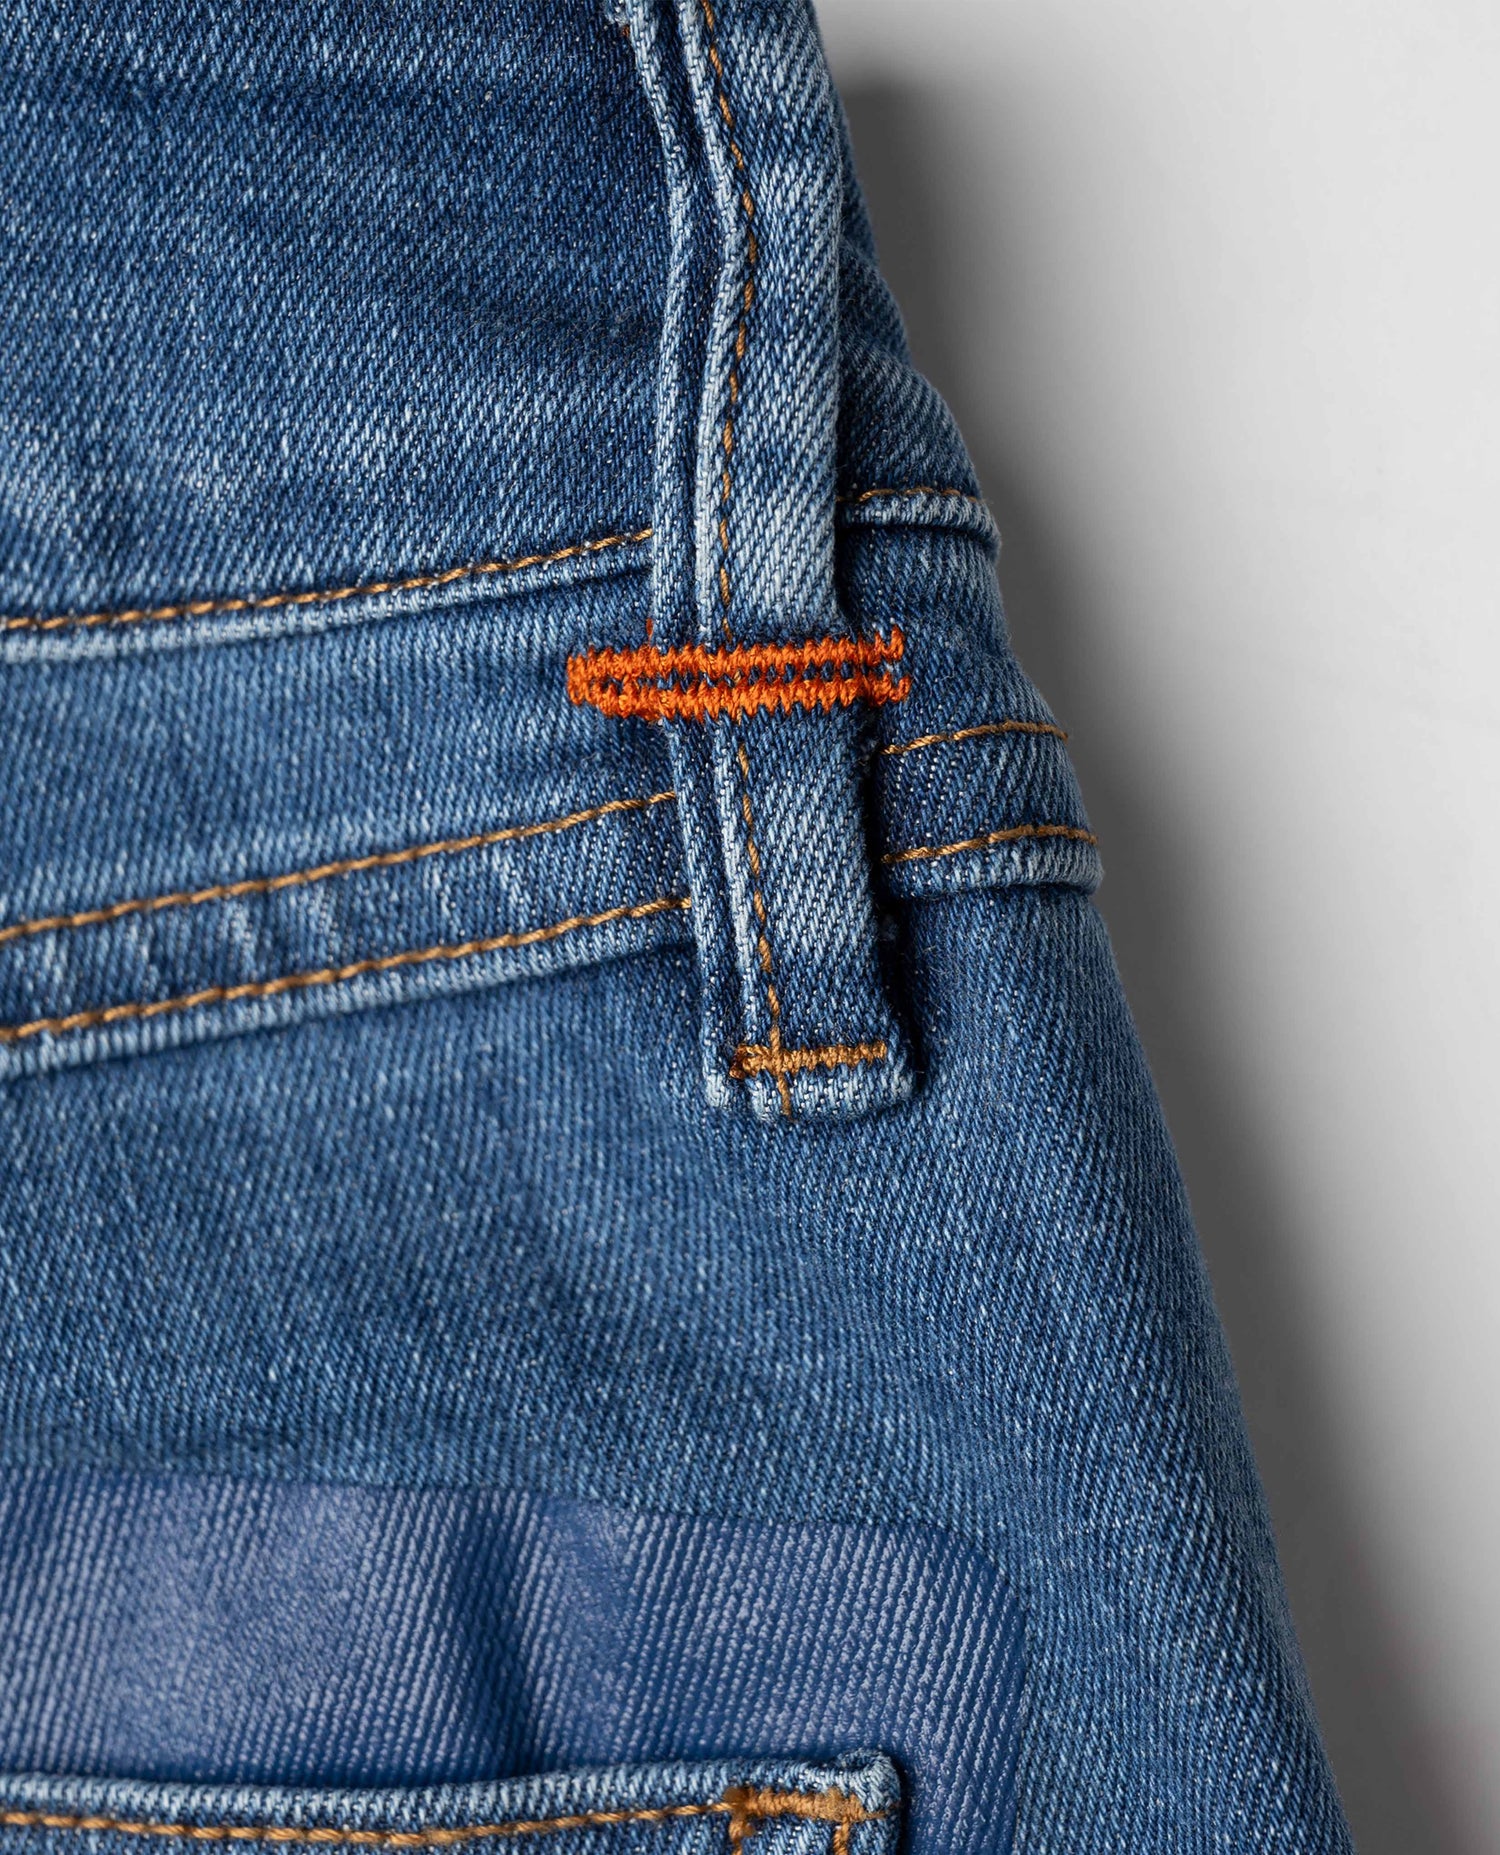 Pinterest | Mens jeans pockets, Jean pocket designs, Denim jeans fashion